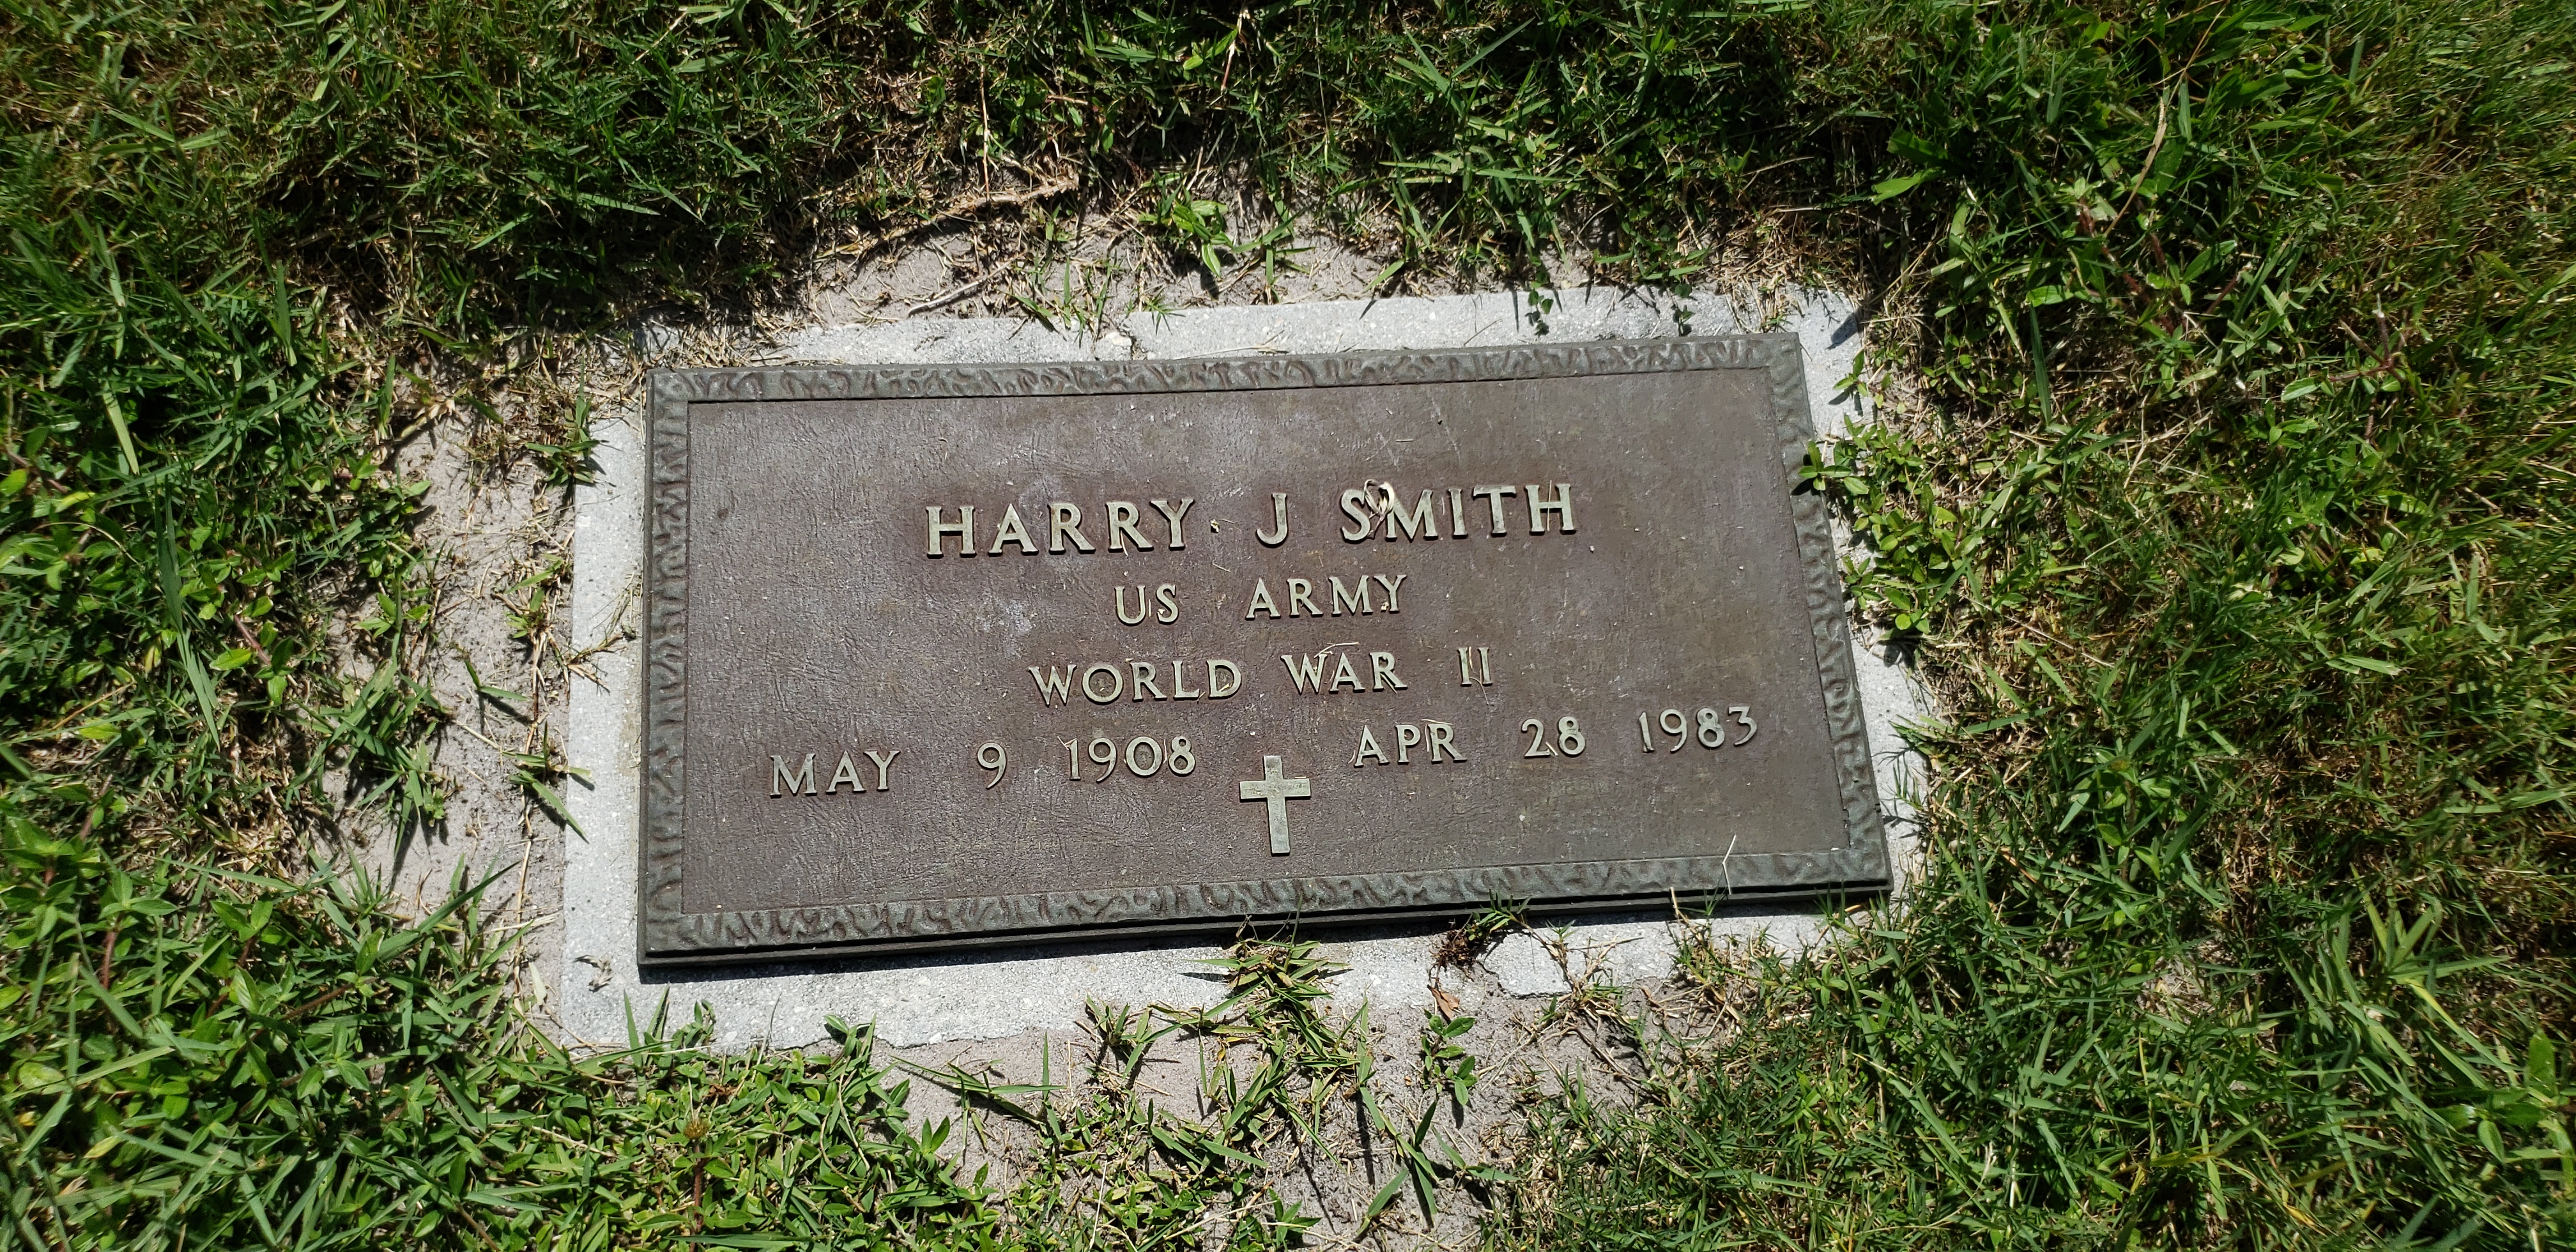 Harry J Smith